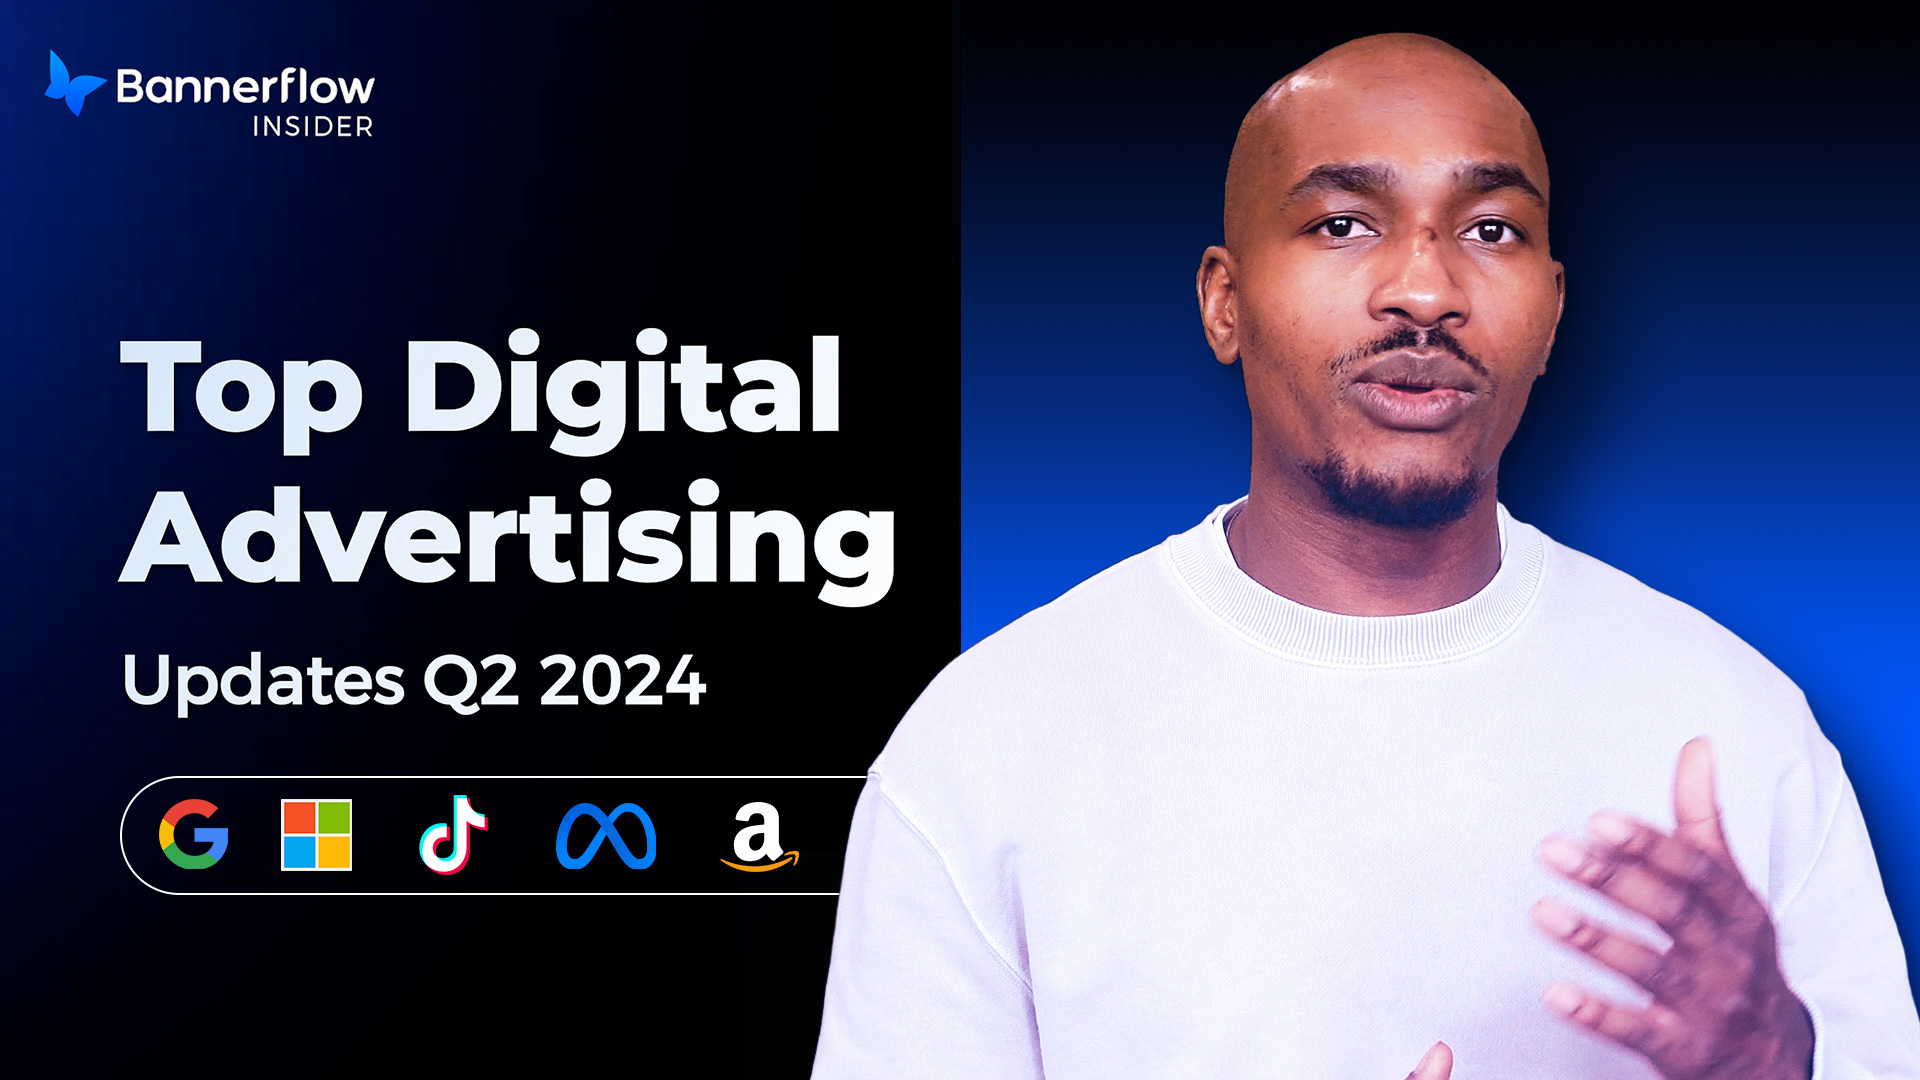 Bannerflow Insider - Digital Advertising Updates For Q2 2024